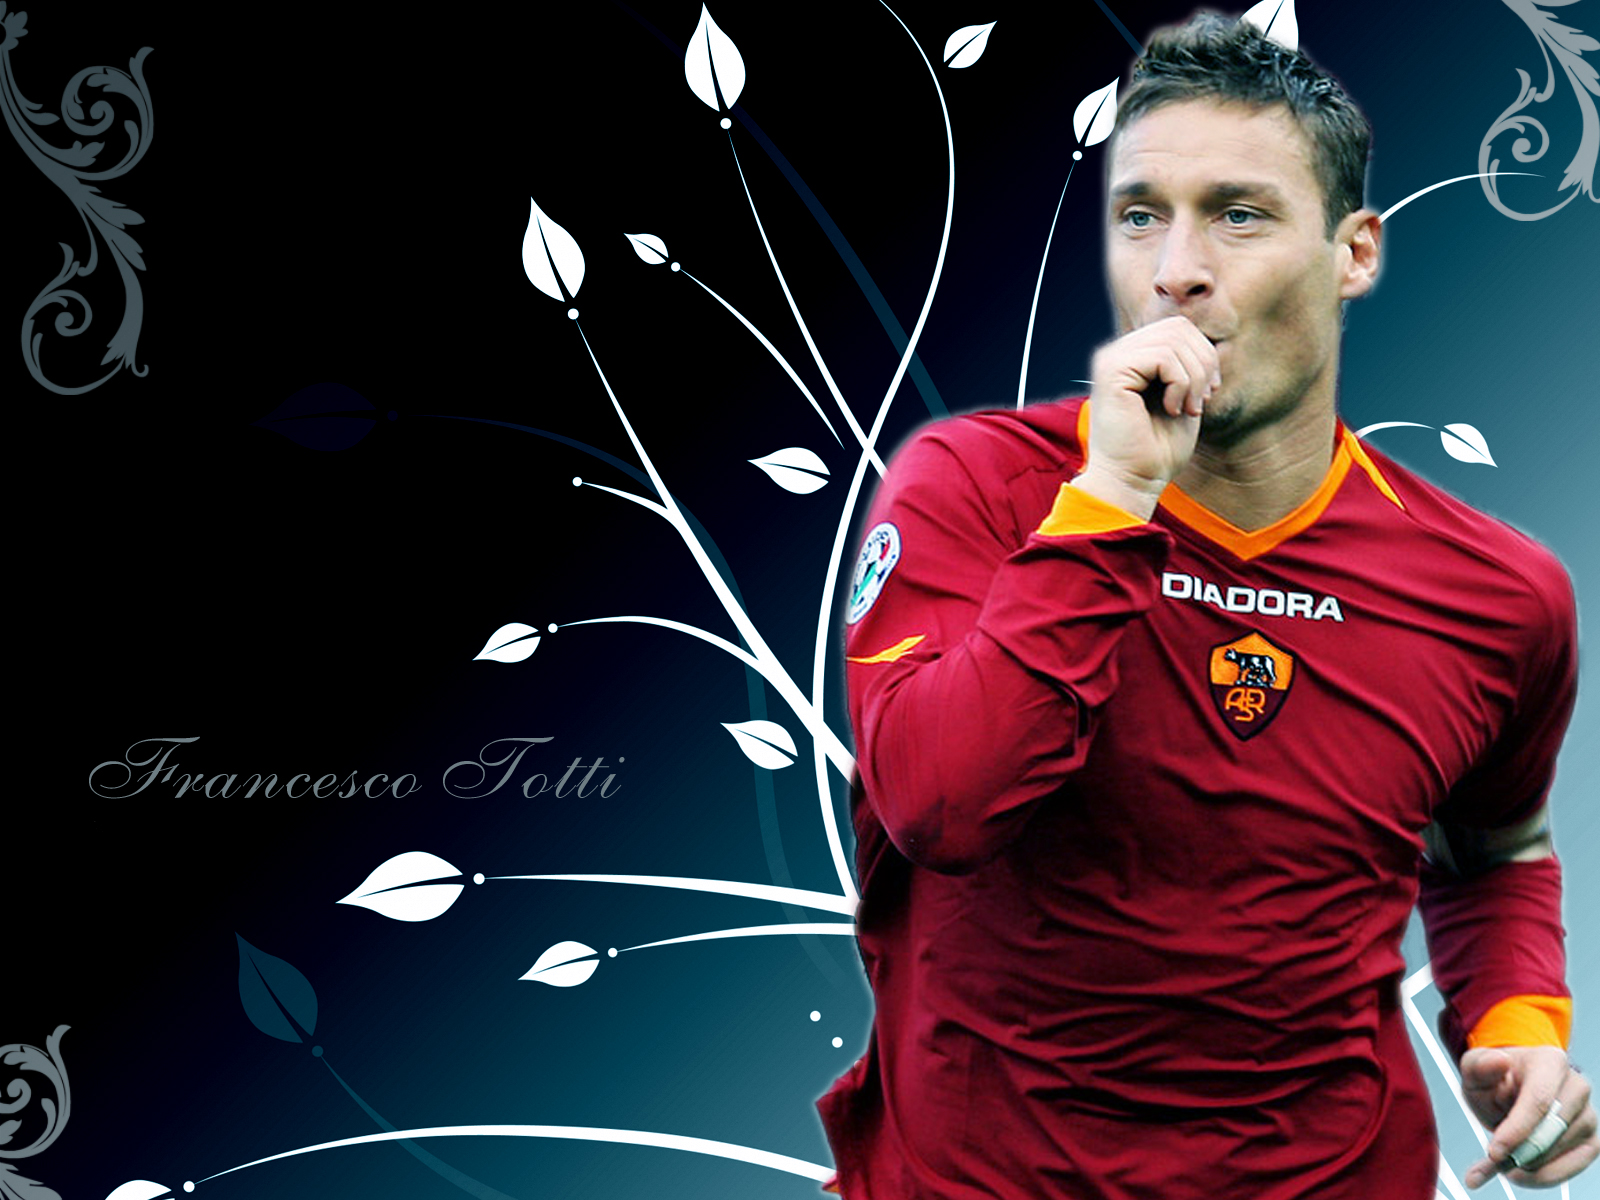 Francesco Totti HD Wallpaper Football Club